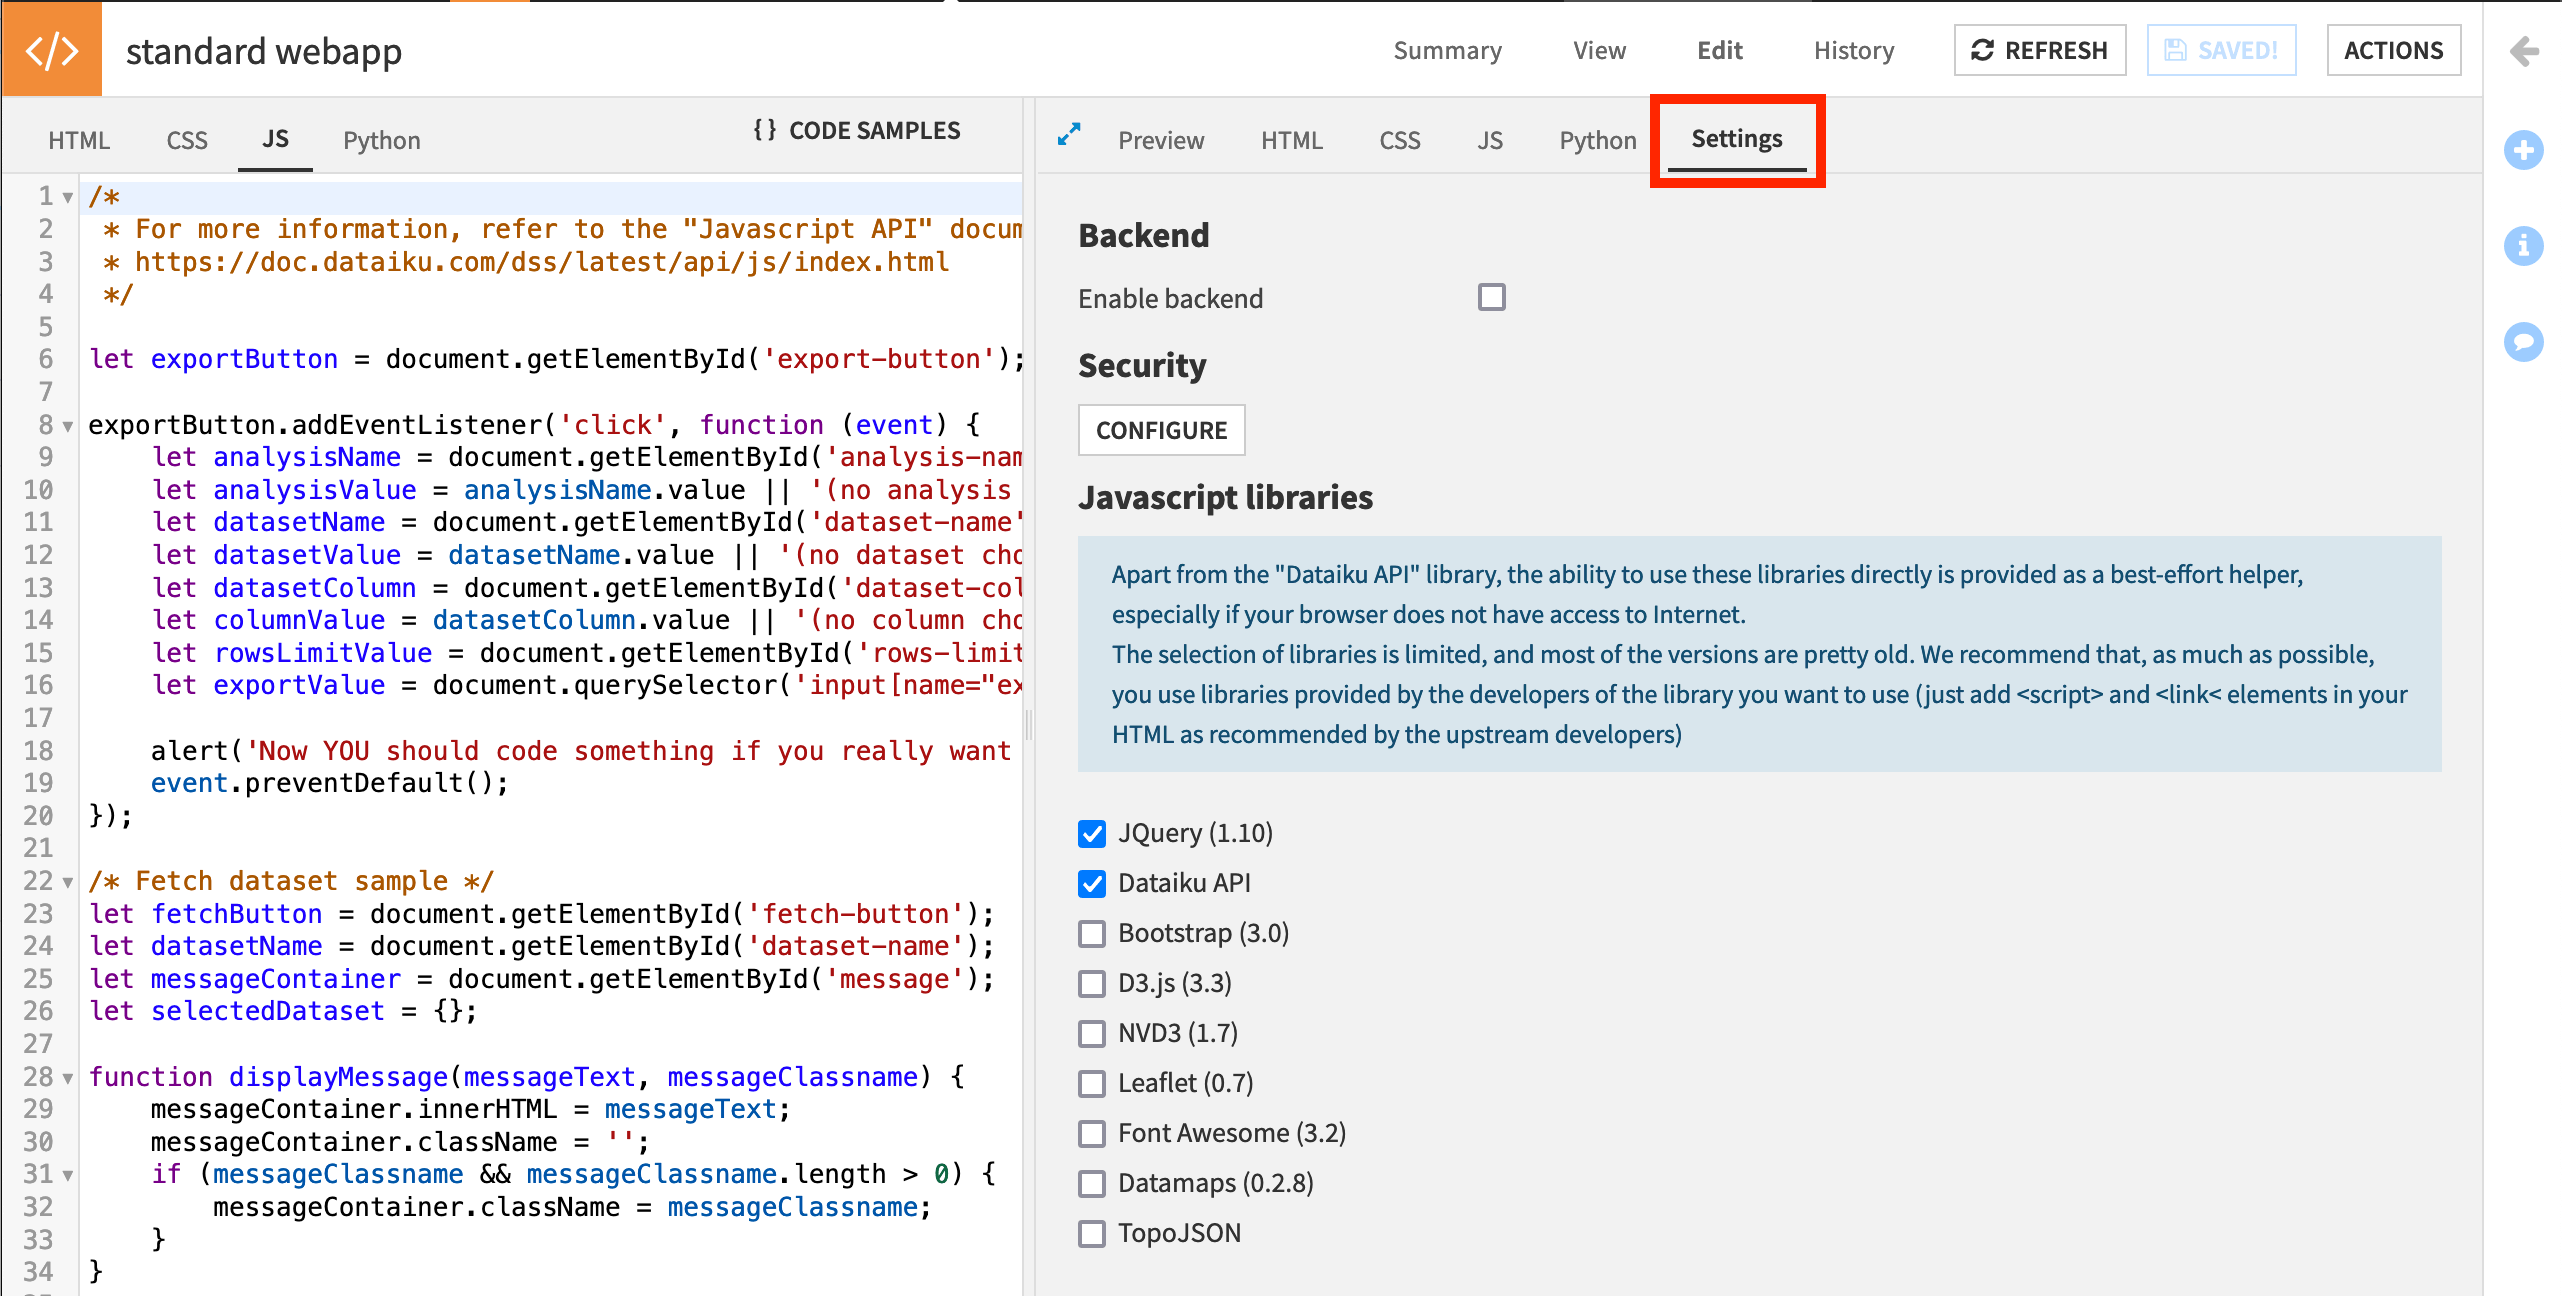 Dataiku screenshot of the Settings tab of a standard webapp where many standard JavaScript libraries can be loaded.